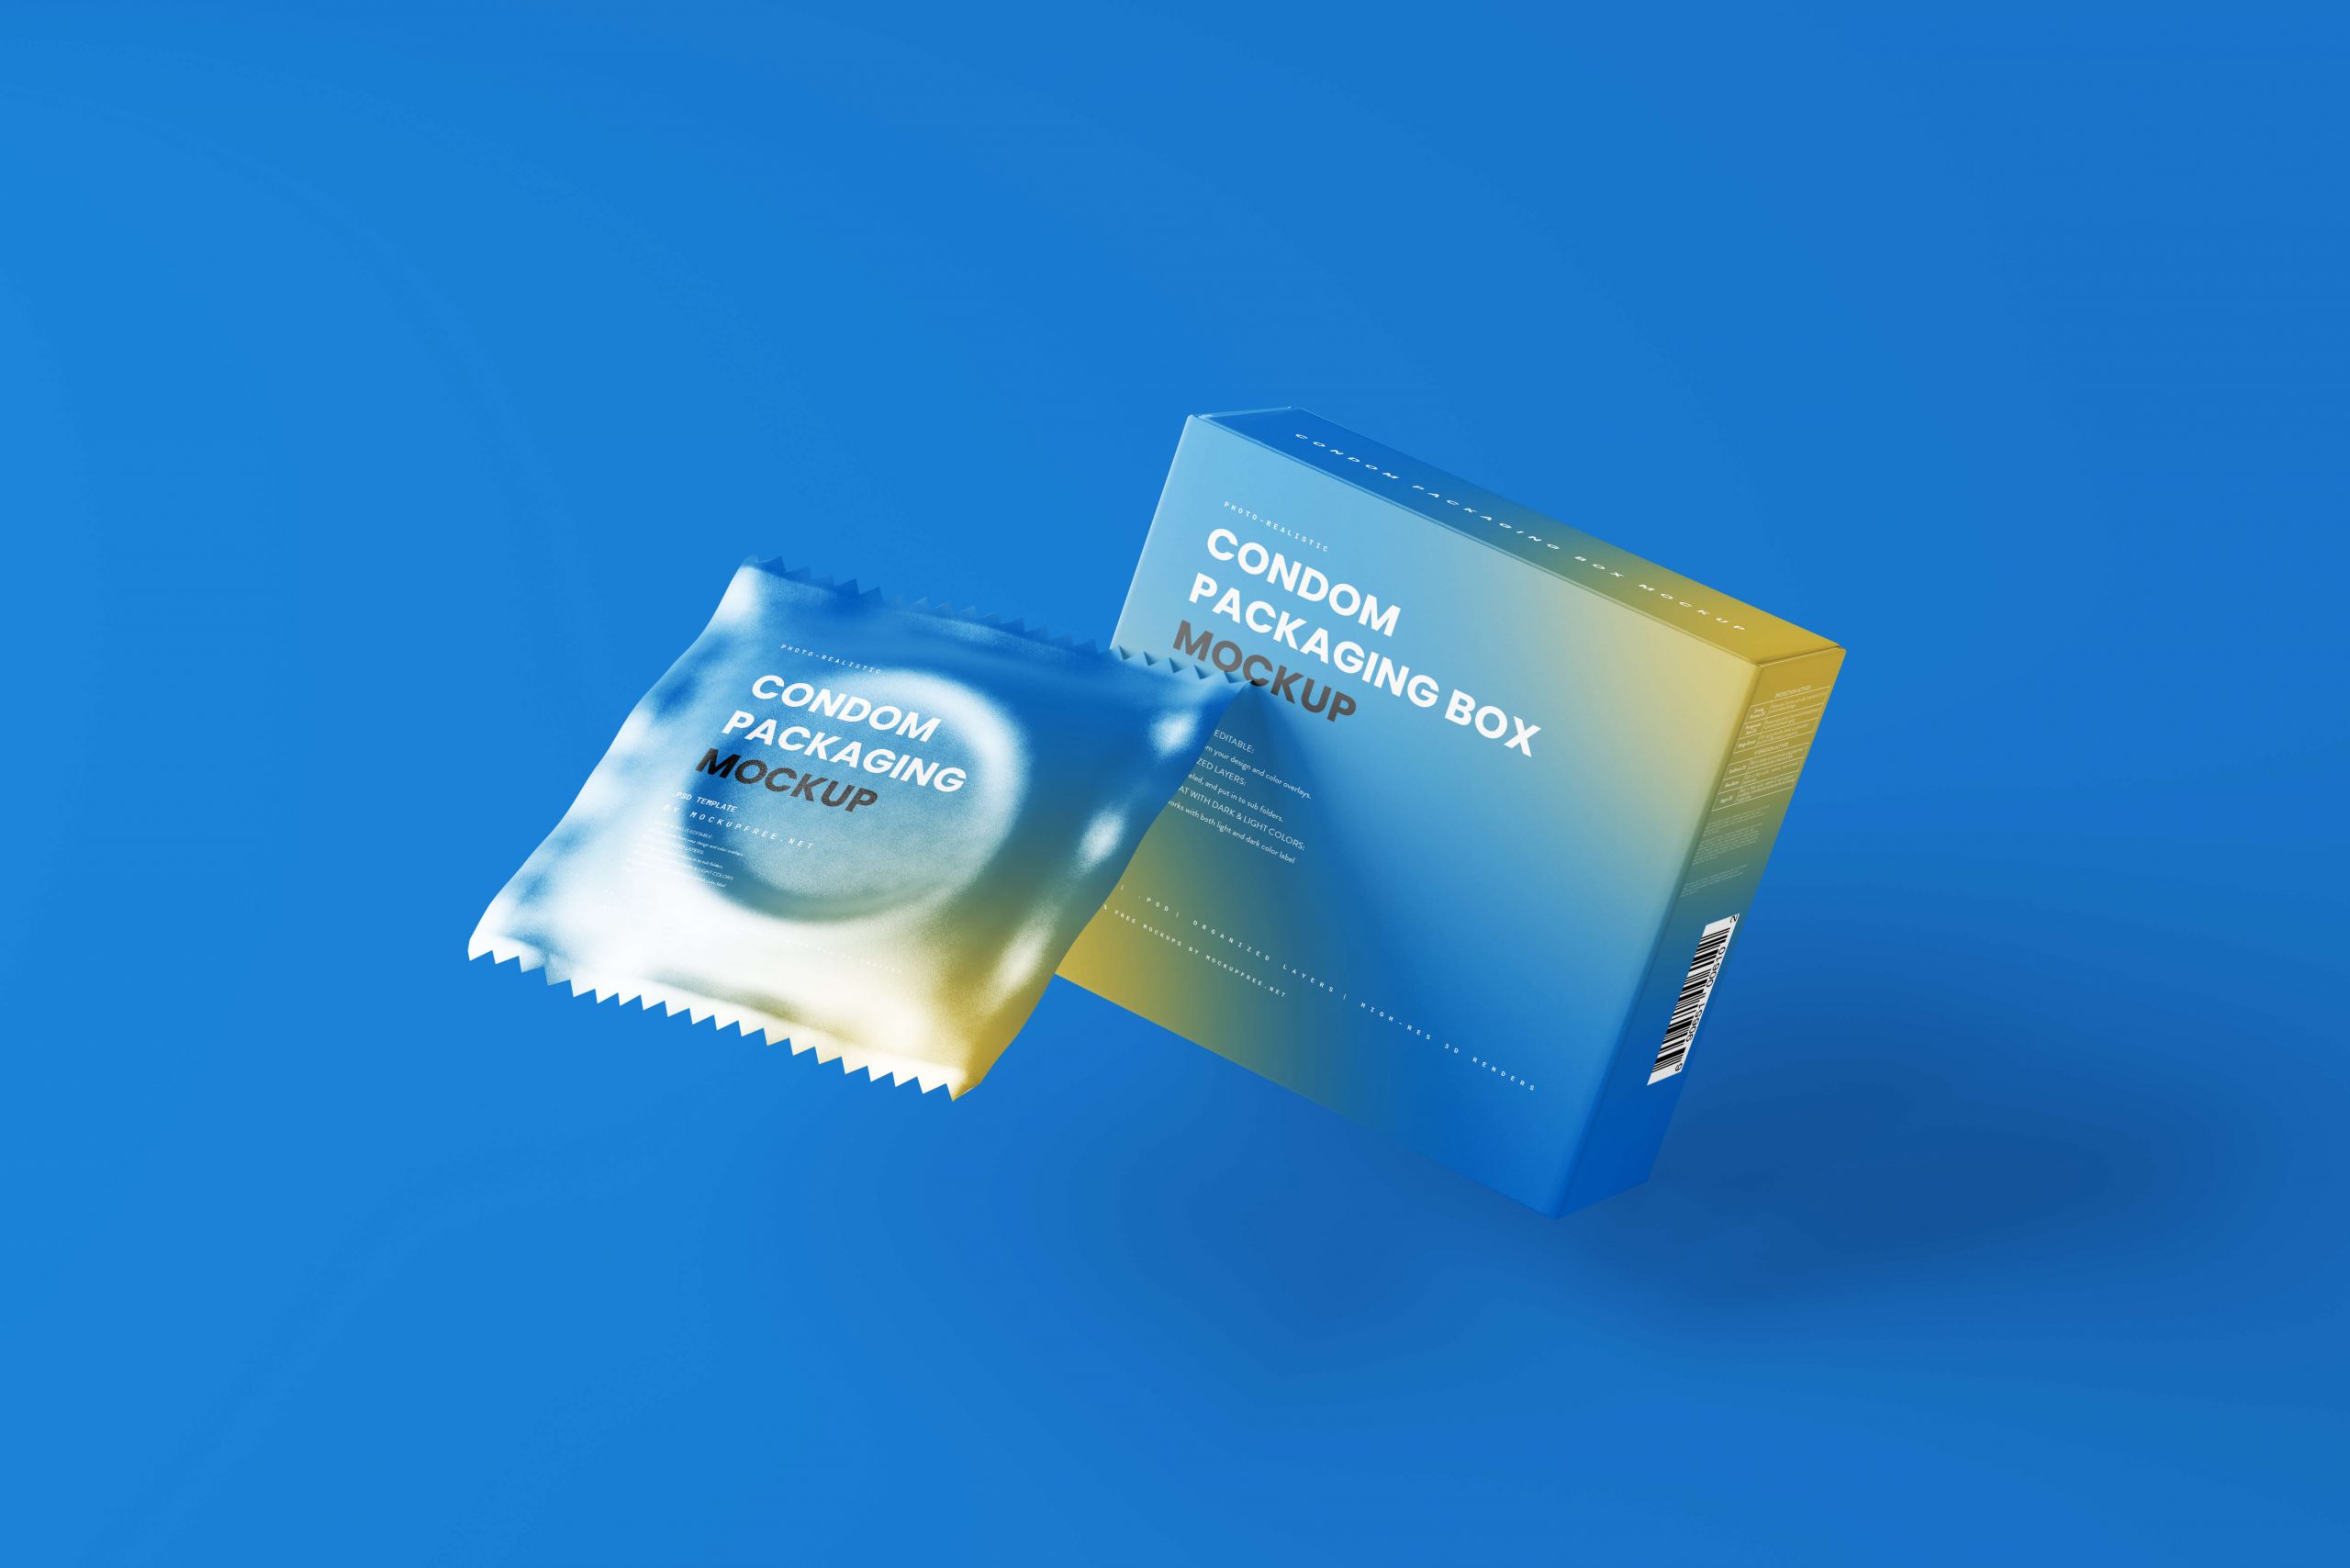 10 Free Condom Sachet Packaging Box Mockup PSD Files1